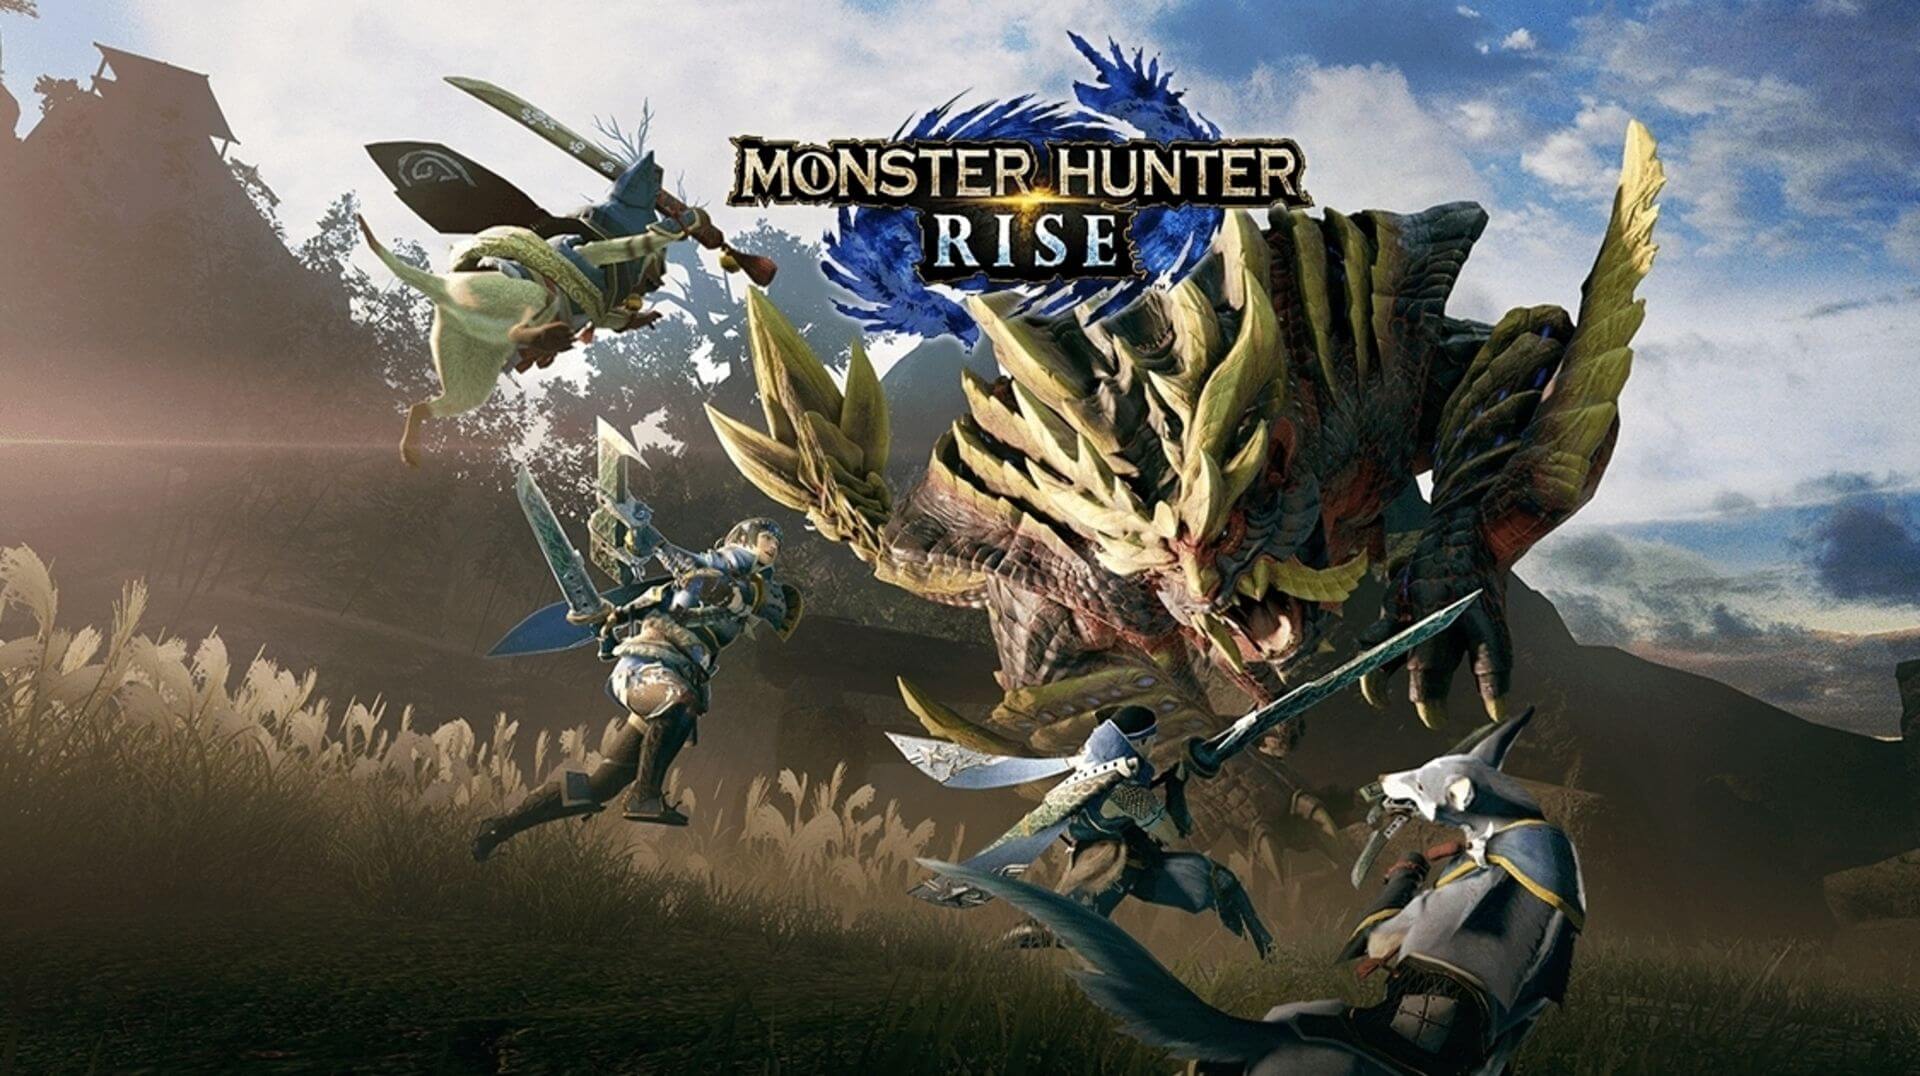 Obrazek z okładki japońskiego bestsellera Monster Hunter: Rise na Nintendo Switch